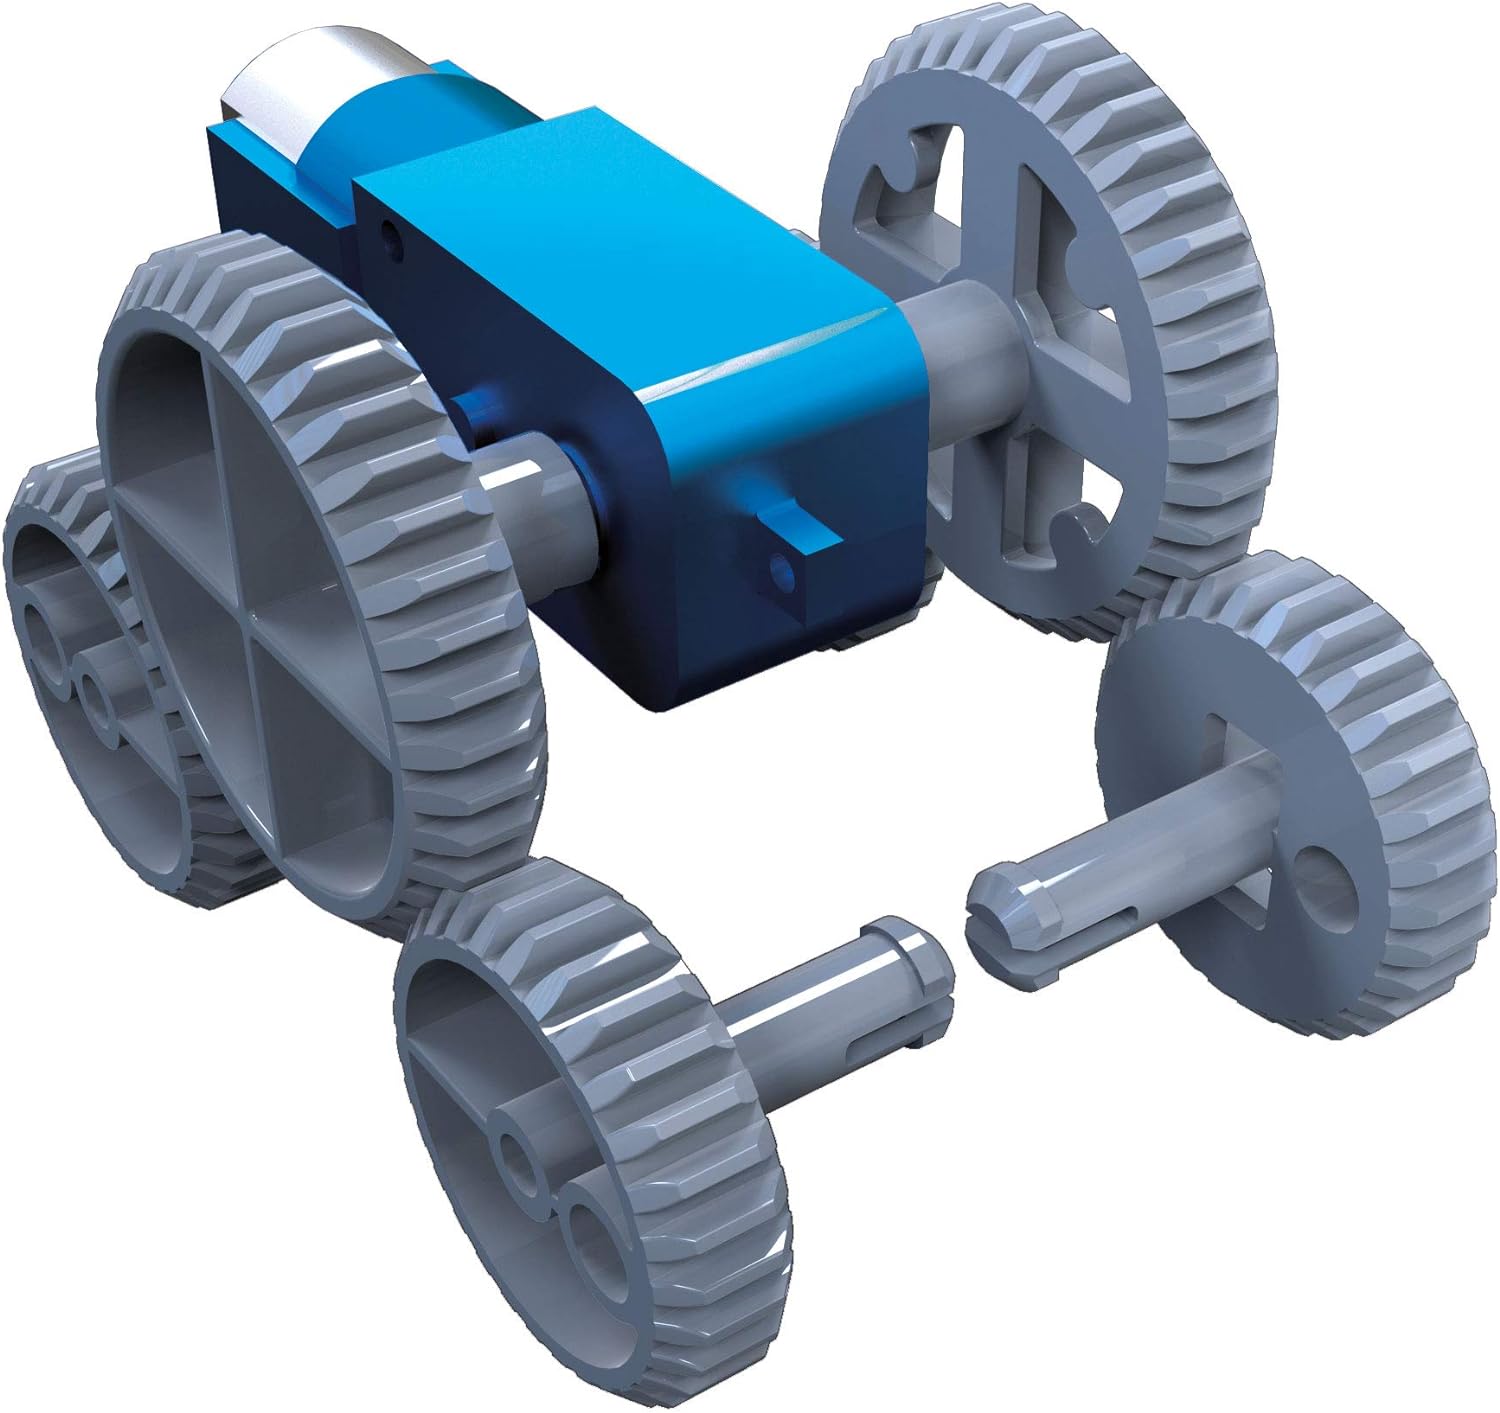 Clementoni Galileo Science - Robot Suction Robot Robotics For Small Enginee